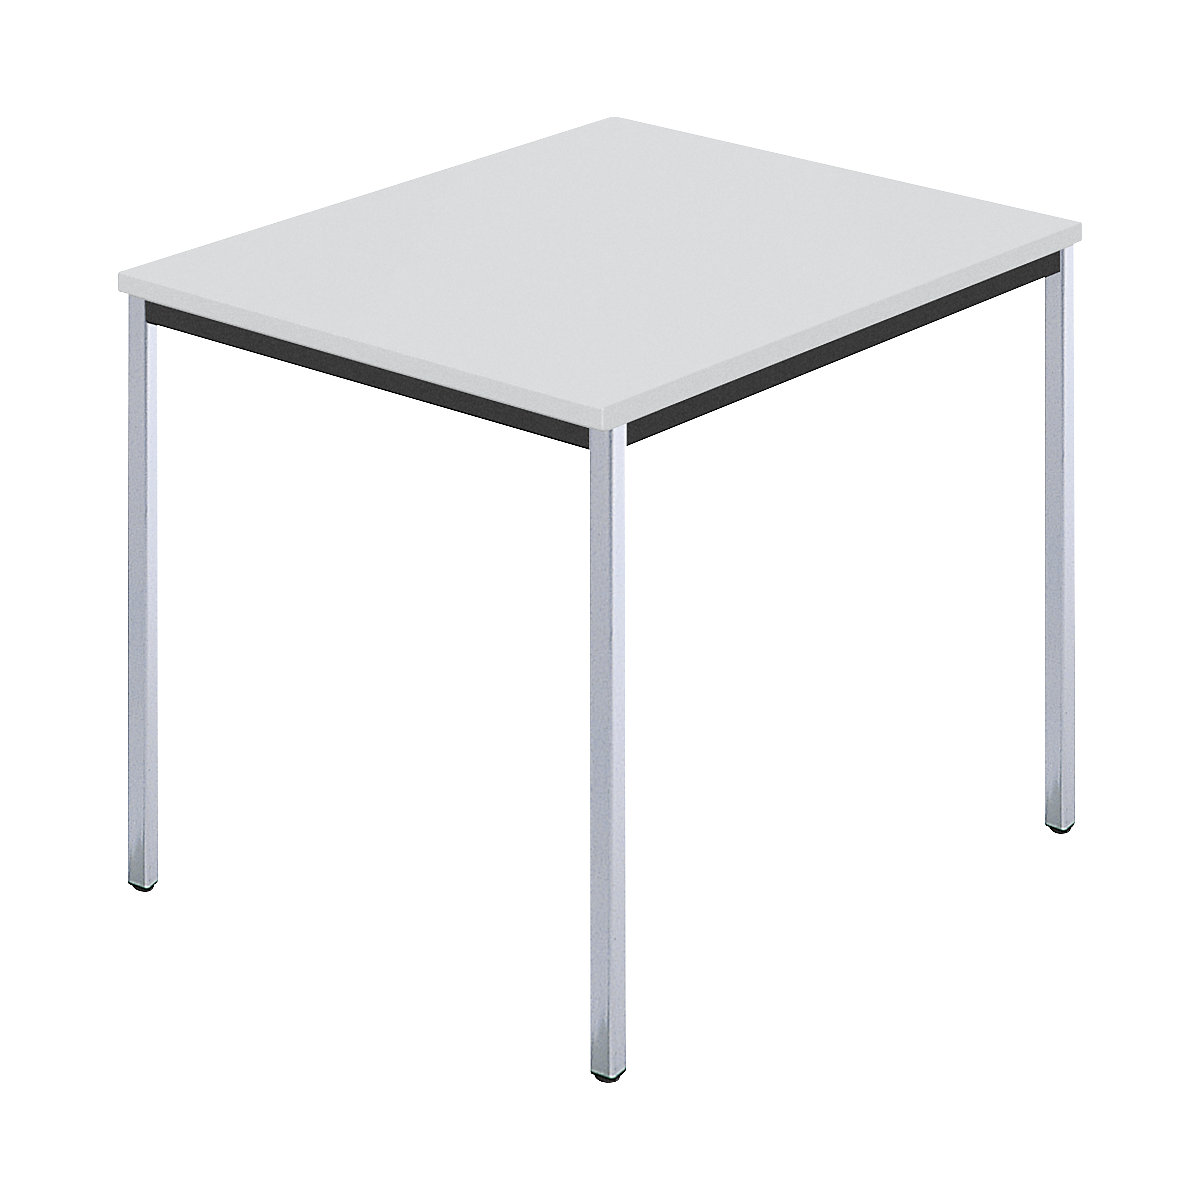 Pravokutni stol, kromirana četverokutna cijev, ŠxD 800 x 800 mm, u sivoj boji-4